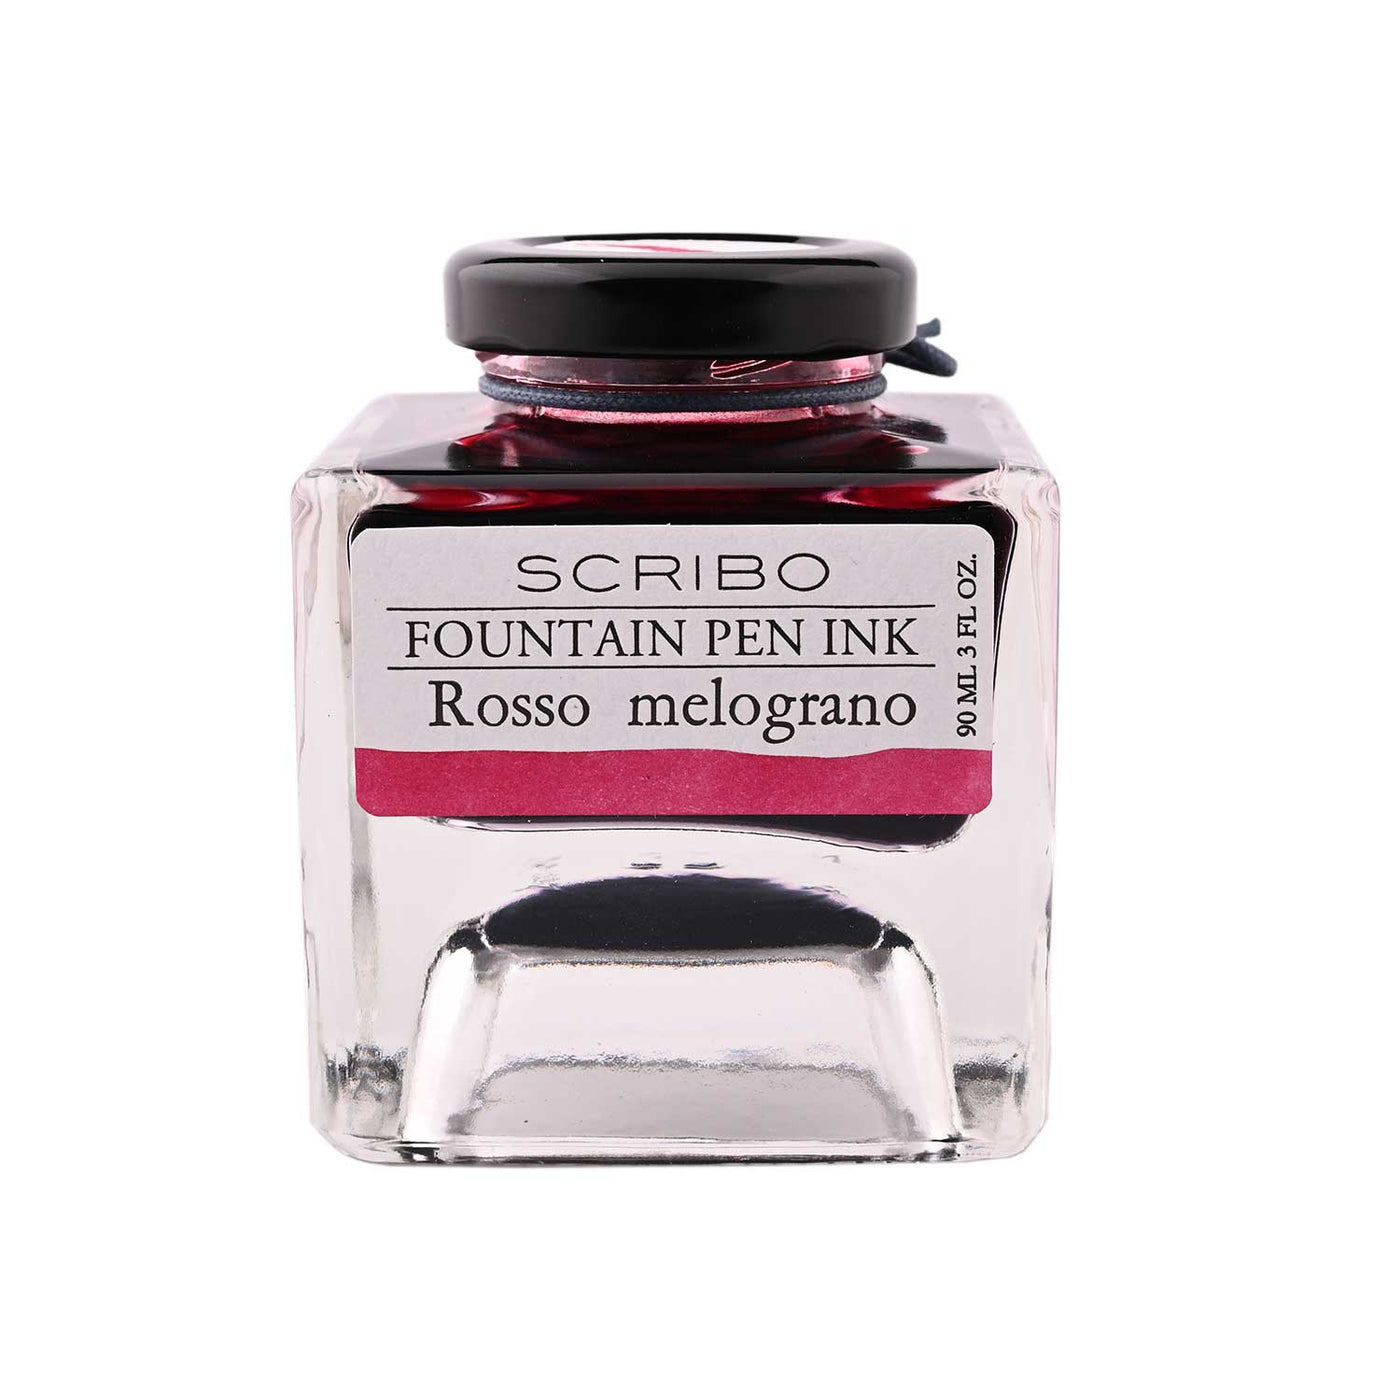 Scribo Fountain Pen Ink Bottle, Rosso Melograno (Red) - 90ml